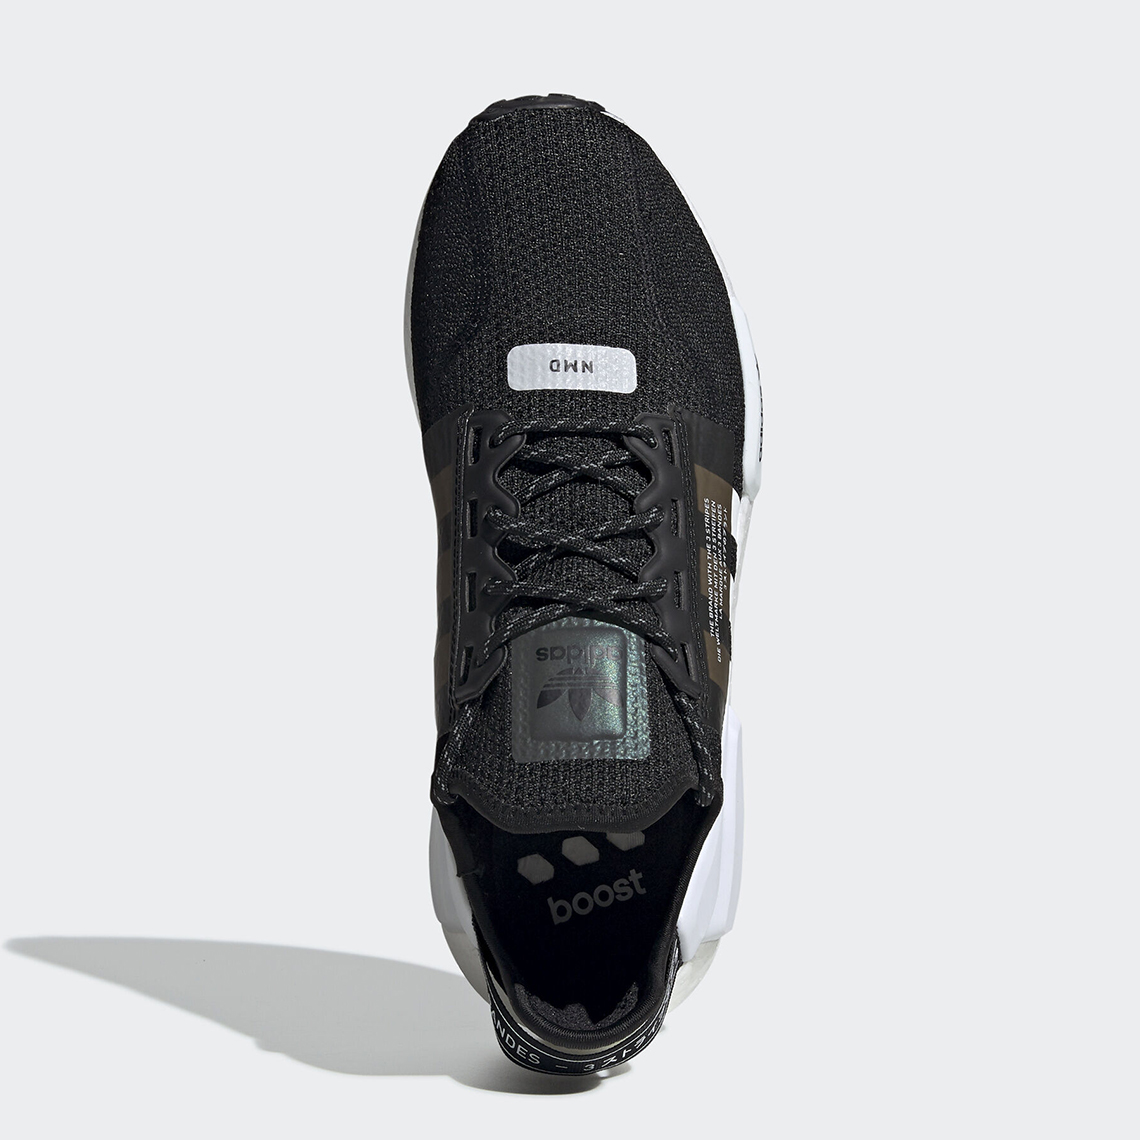 Adidas Nmd R1 V2 Fv9021 Release Date Sneakernews Com